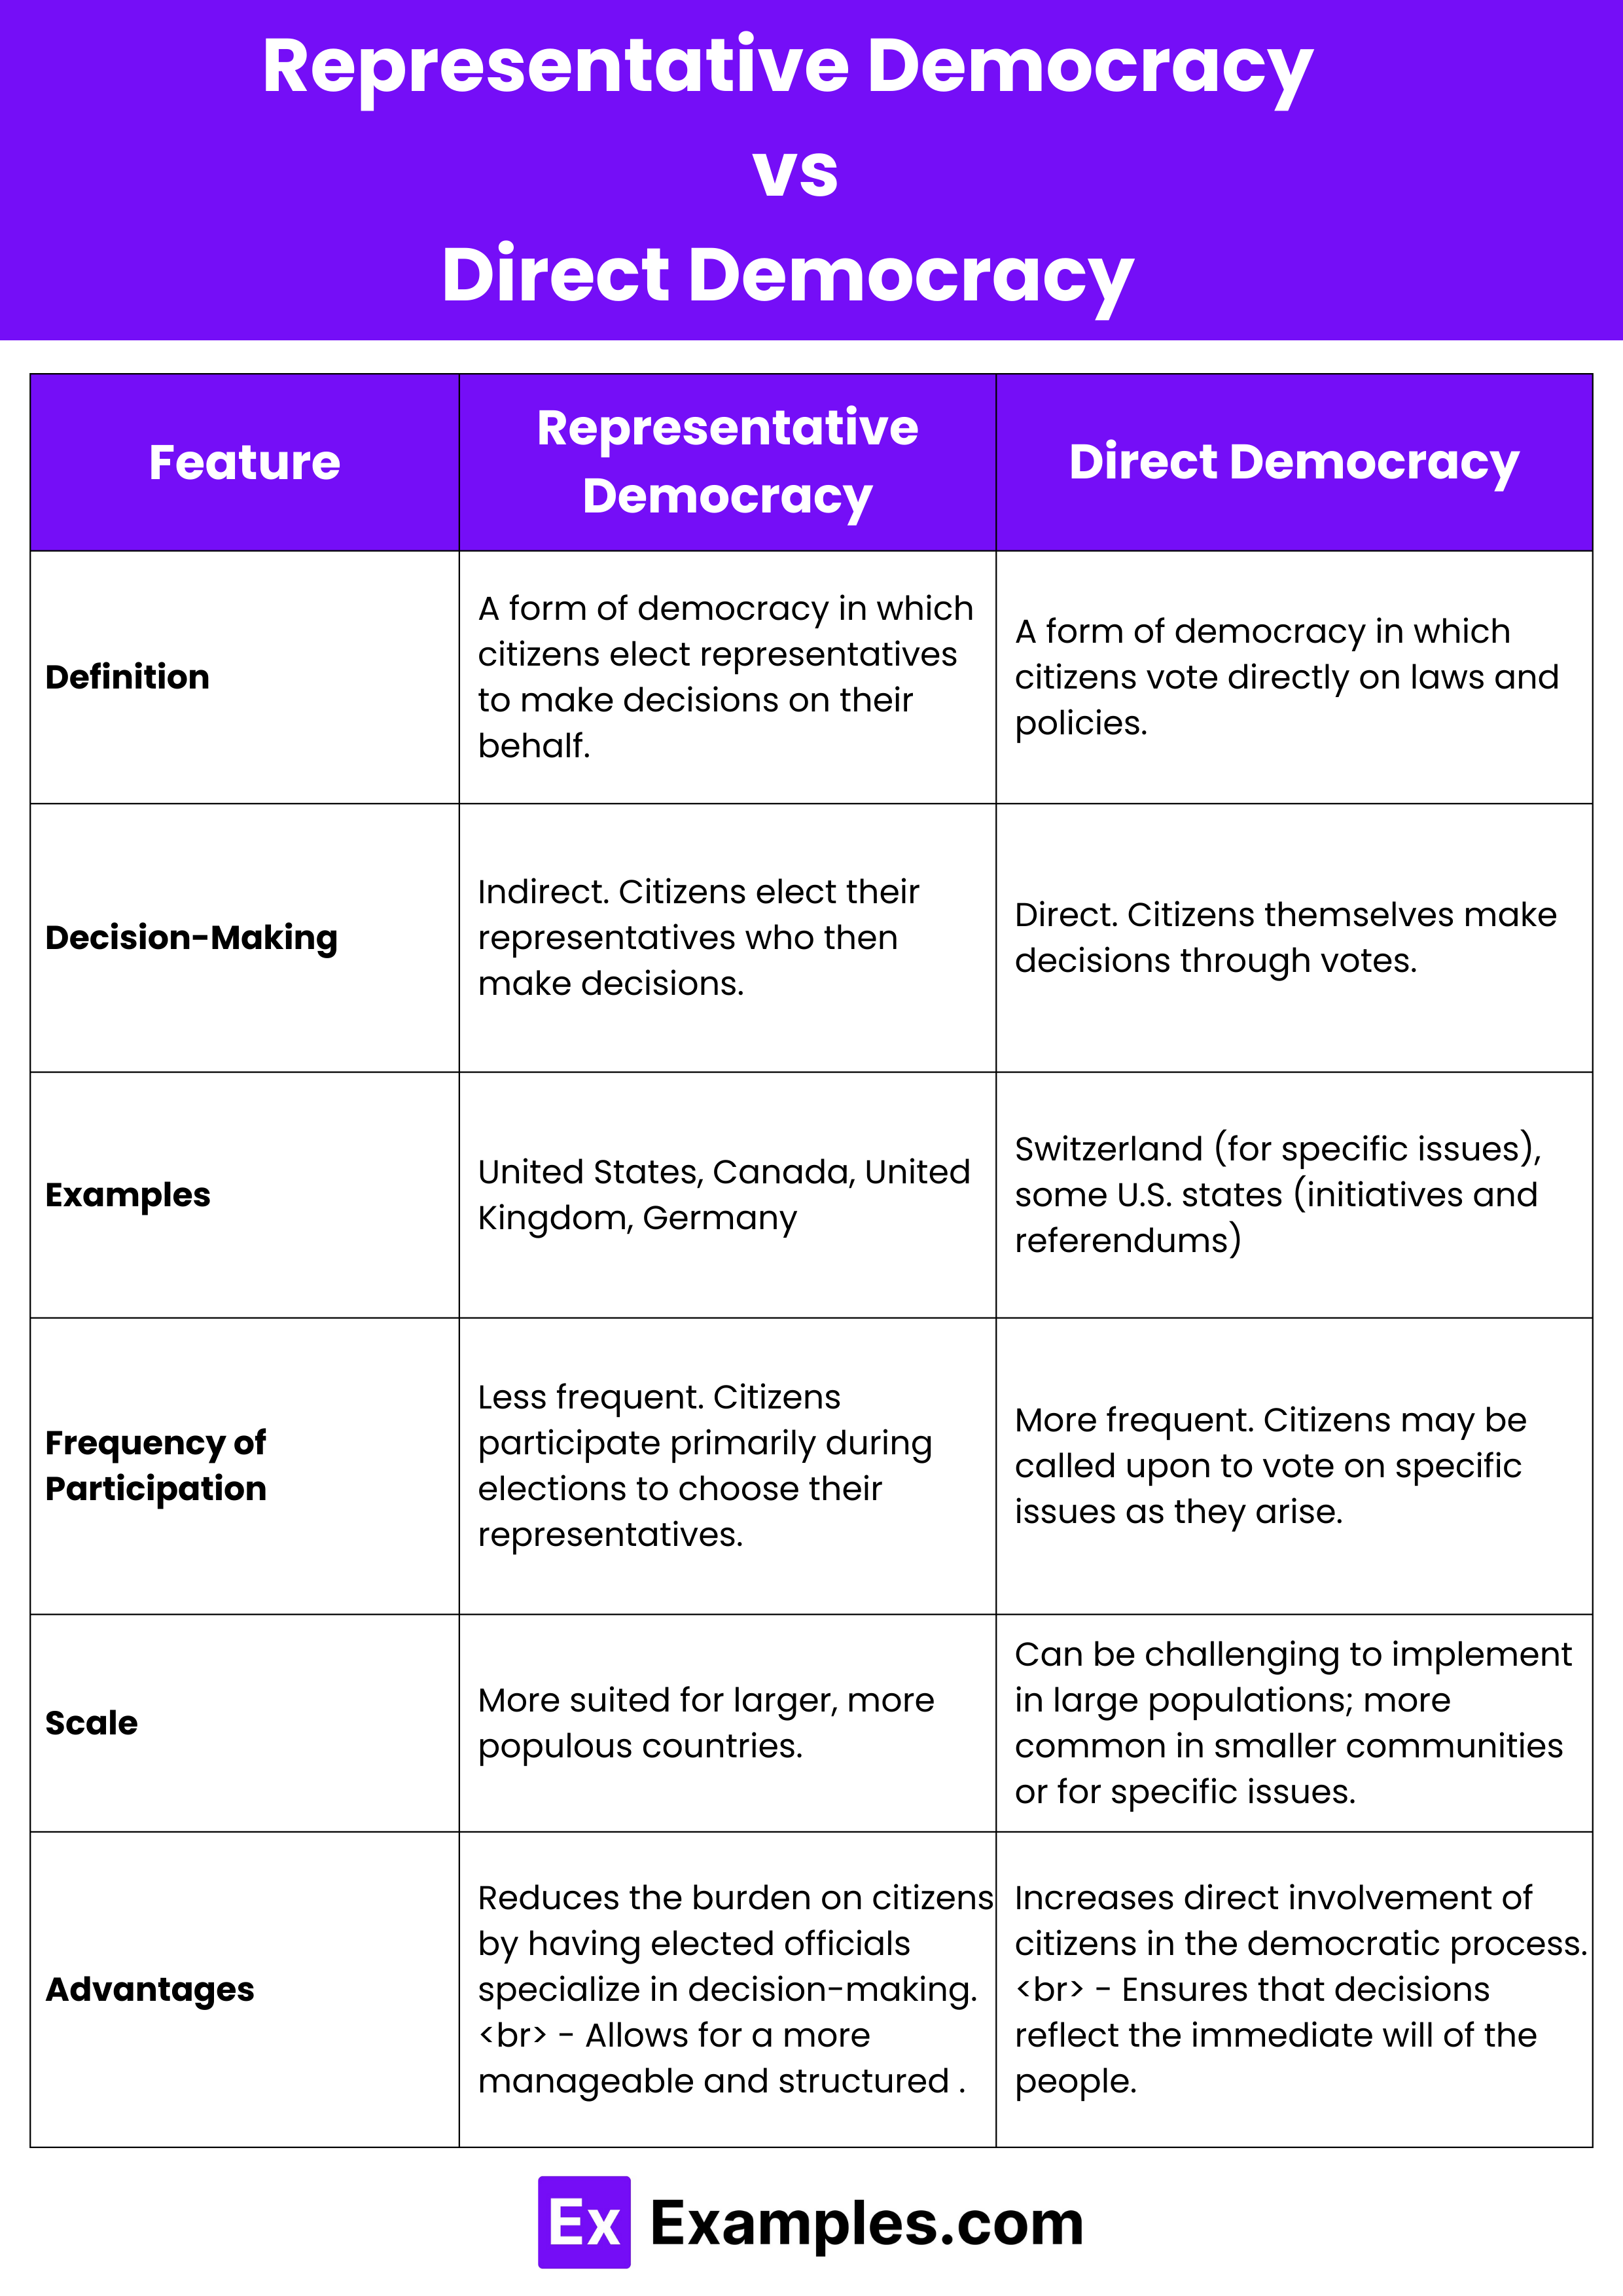 Representative Democracy and Direct Democracy